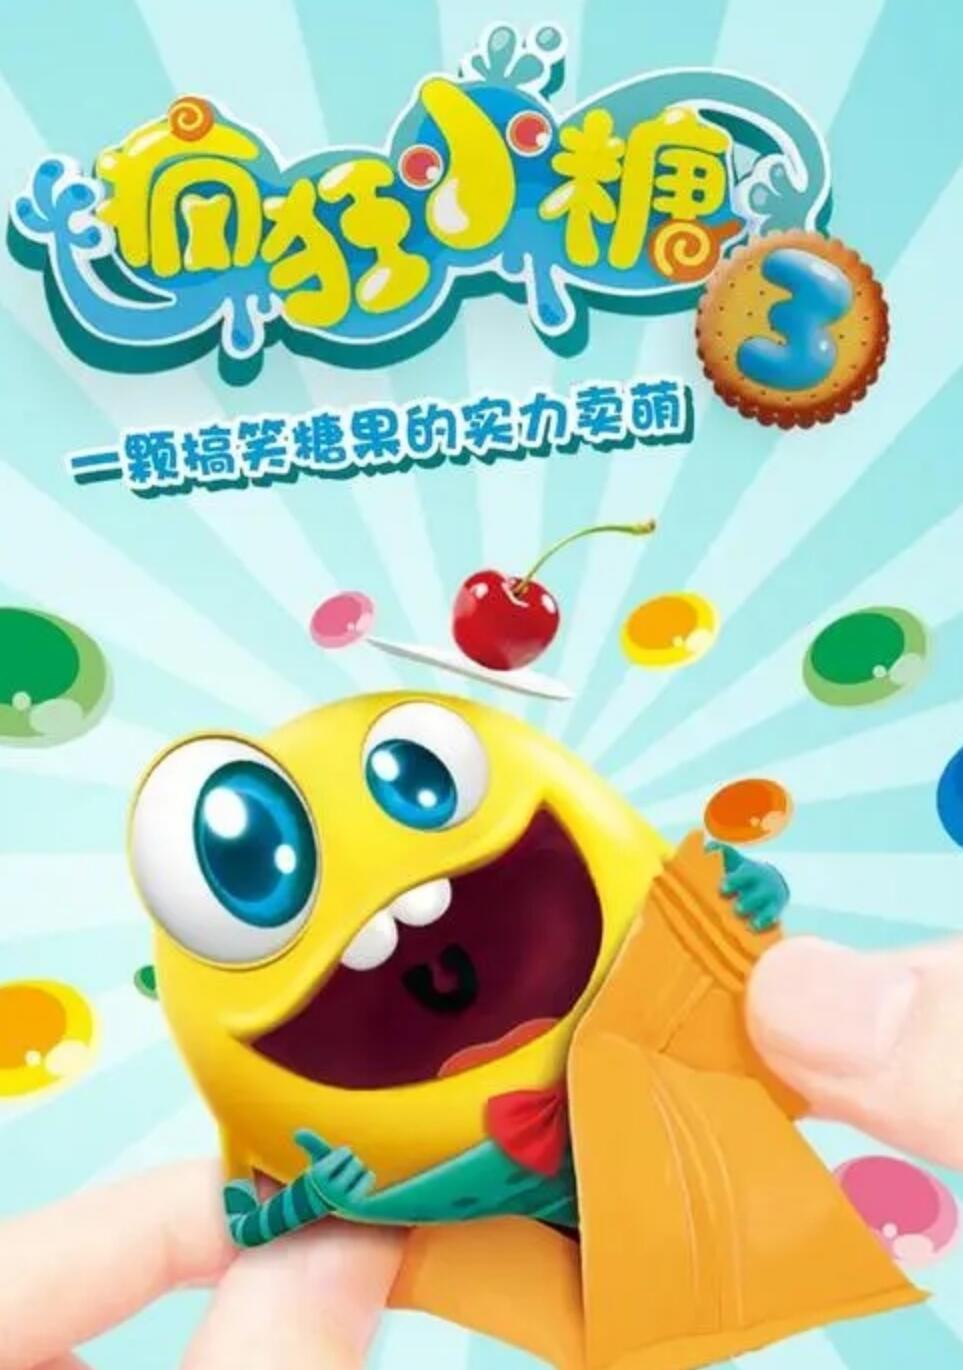 [4K蓝光]儿童搞笑益智动画片《疯狂小糖》第三季全52集下载 mp4高清720p 国语中字